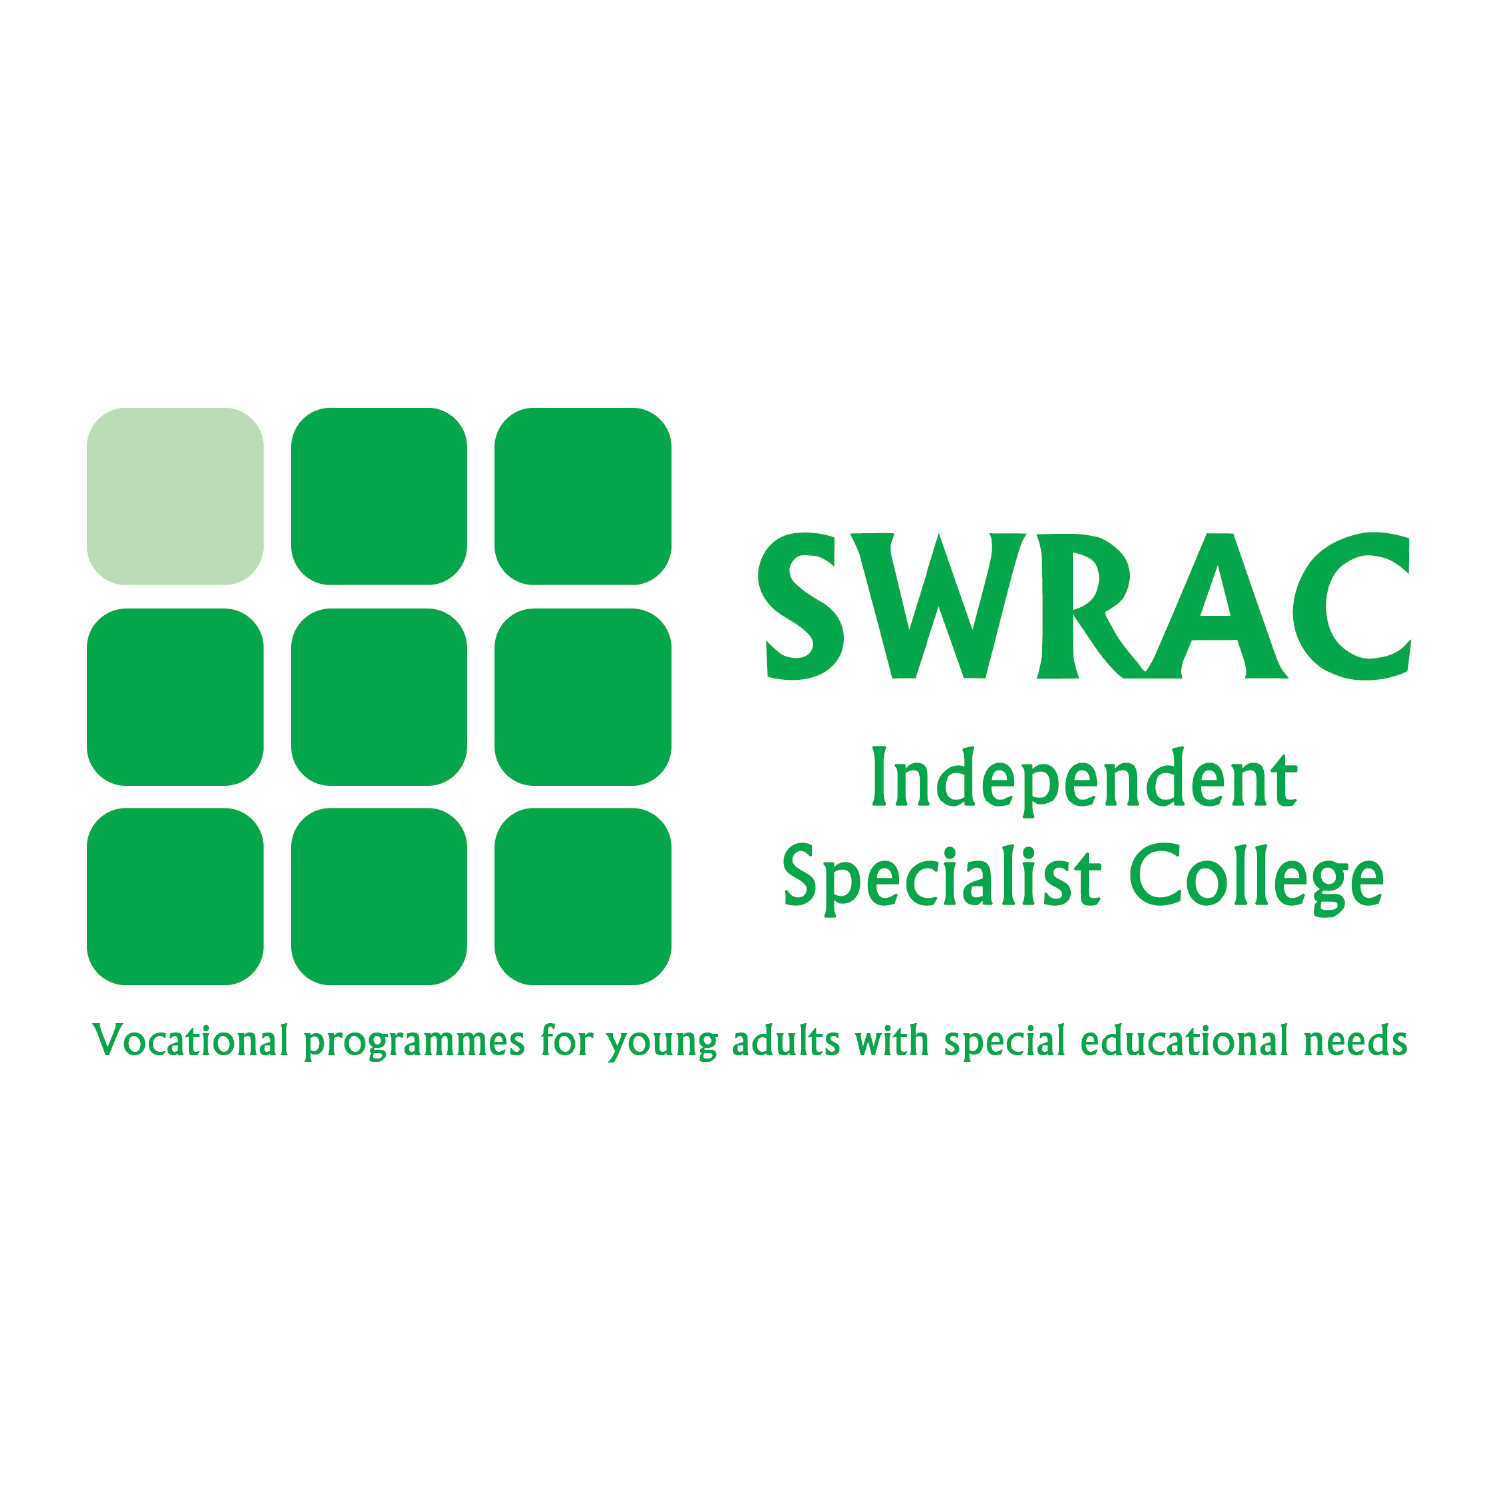 SWRAC Independent Specialist College logo